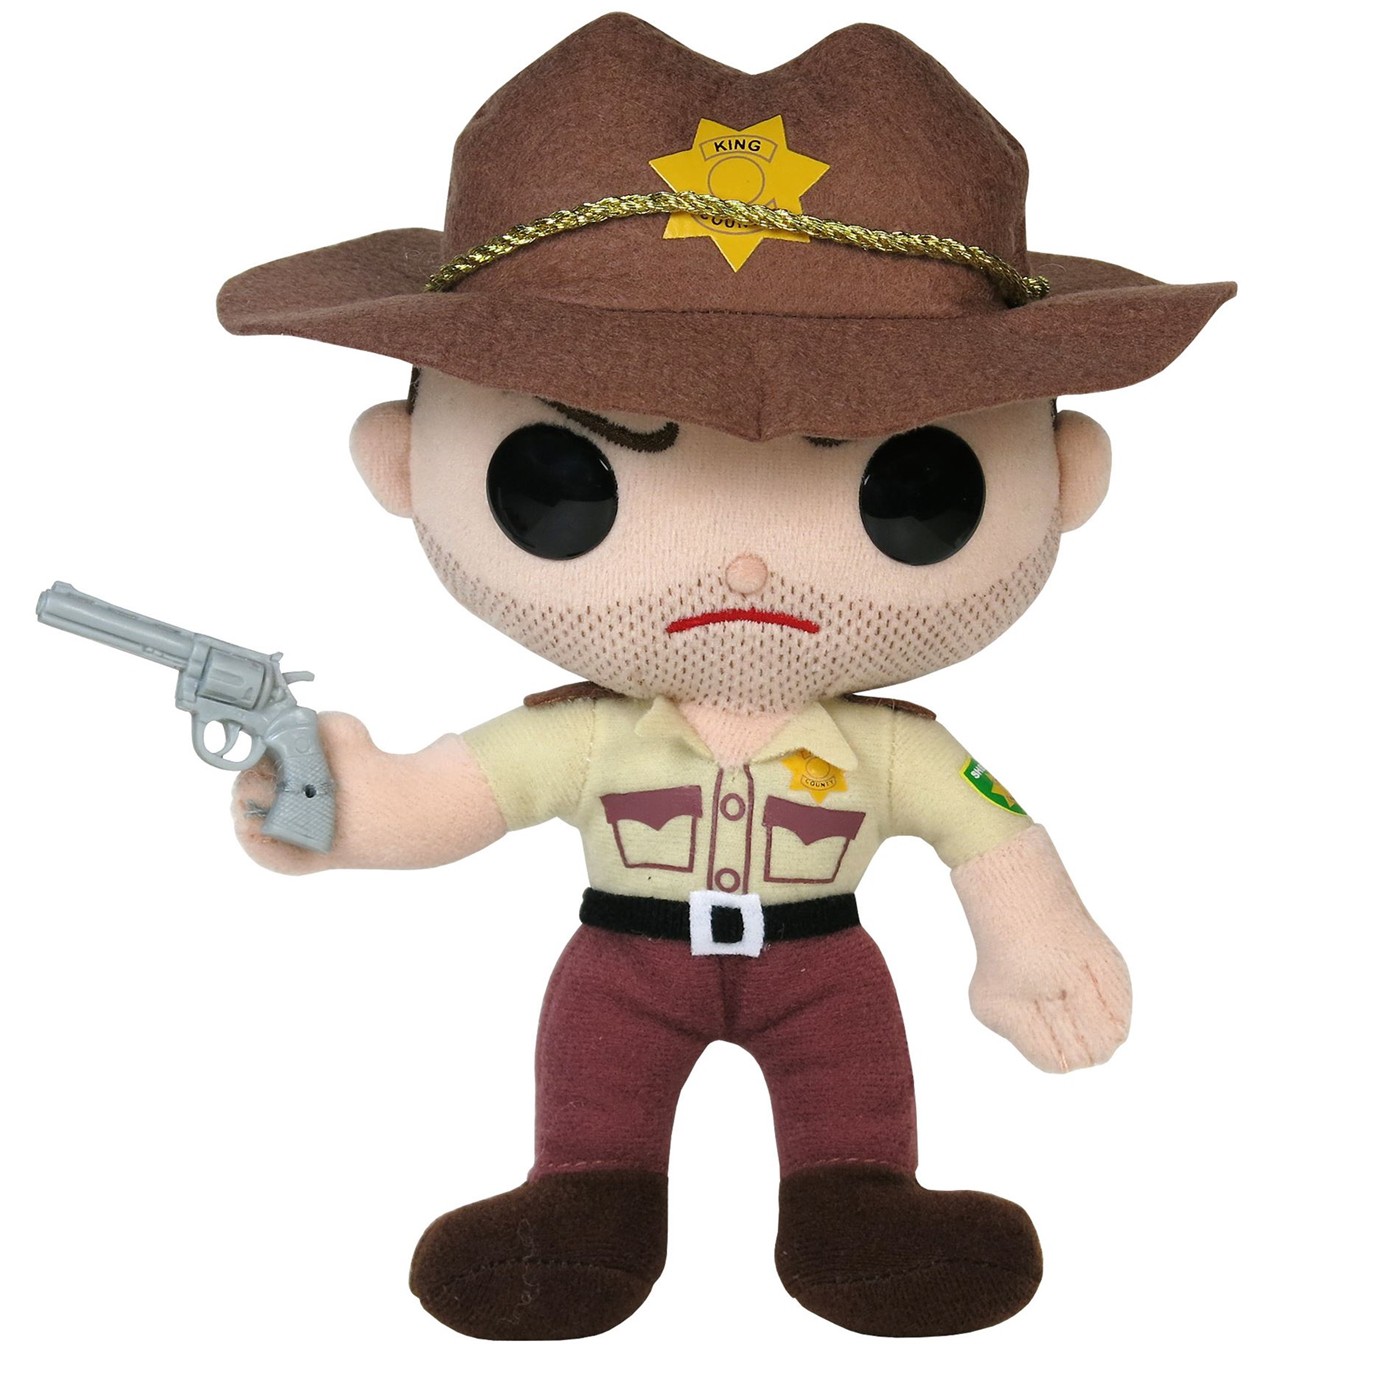 Walking Dead Rick Grimes Plush Toy